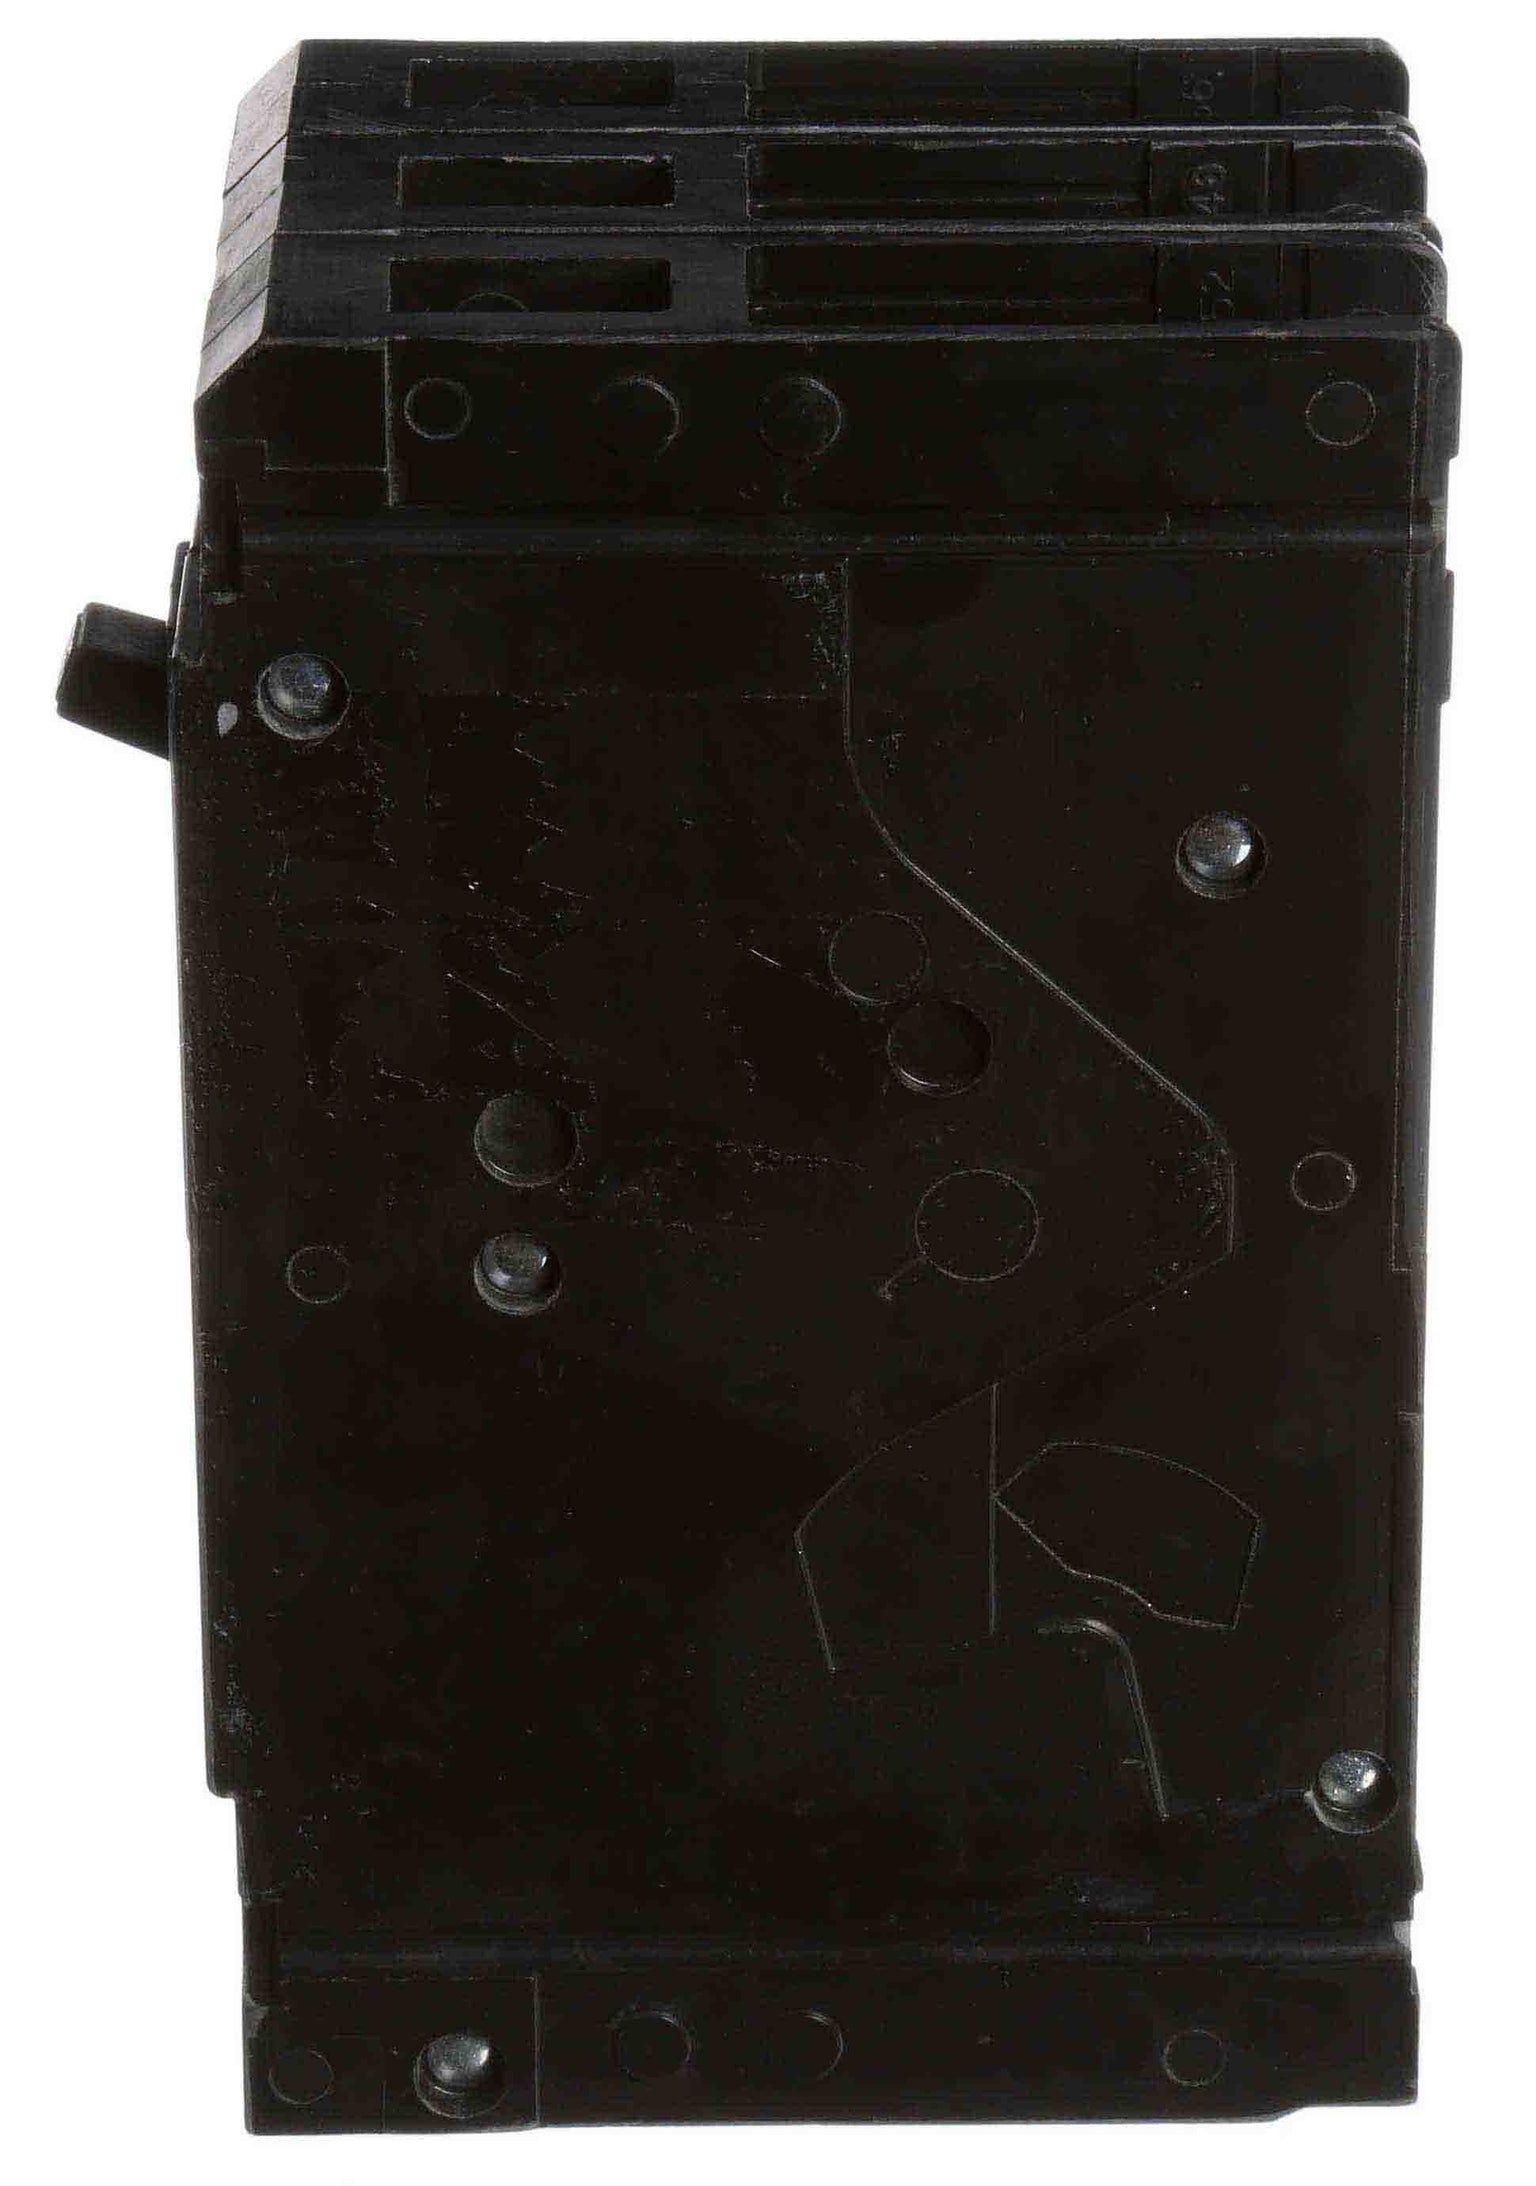 ED23B090L - Siemens - Molded Case Circuit Breaker